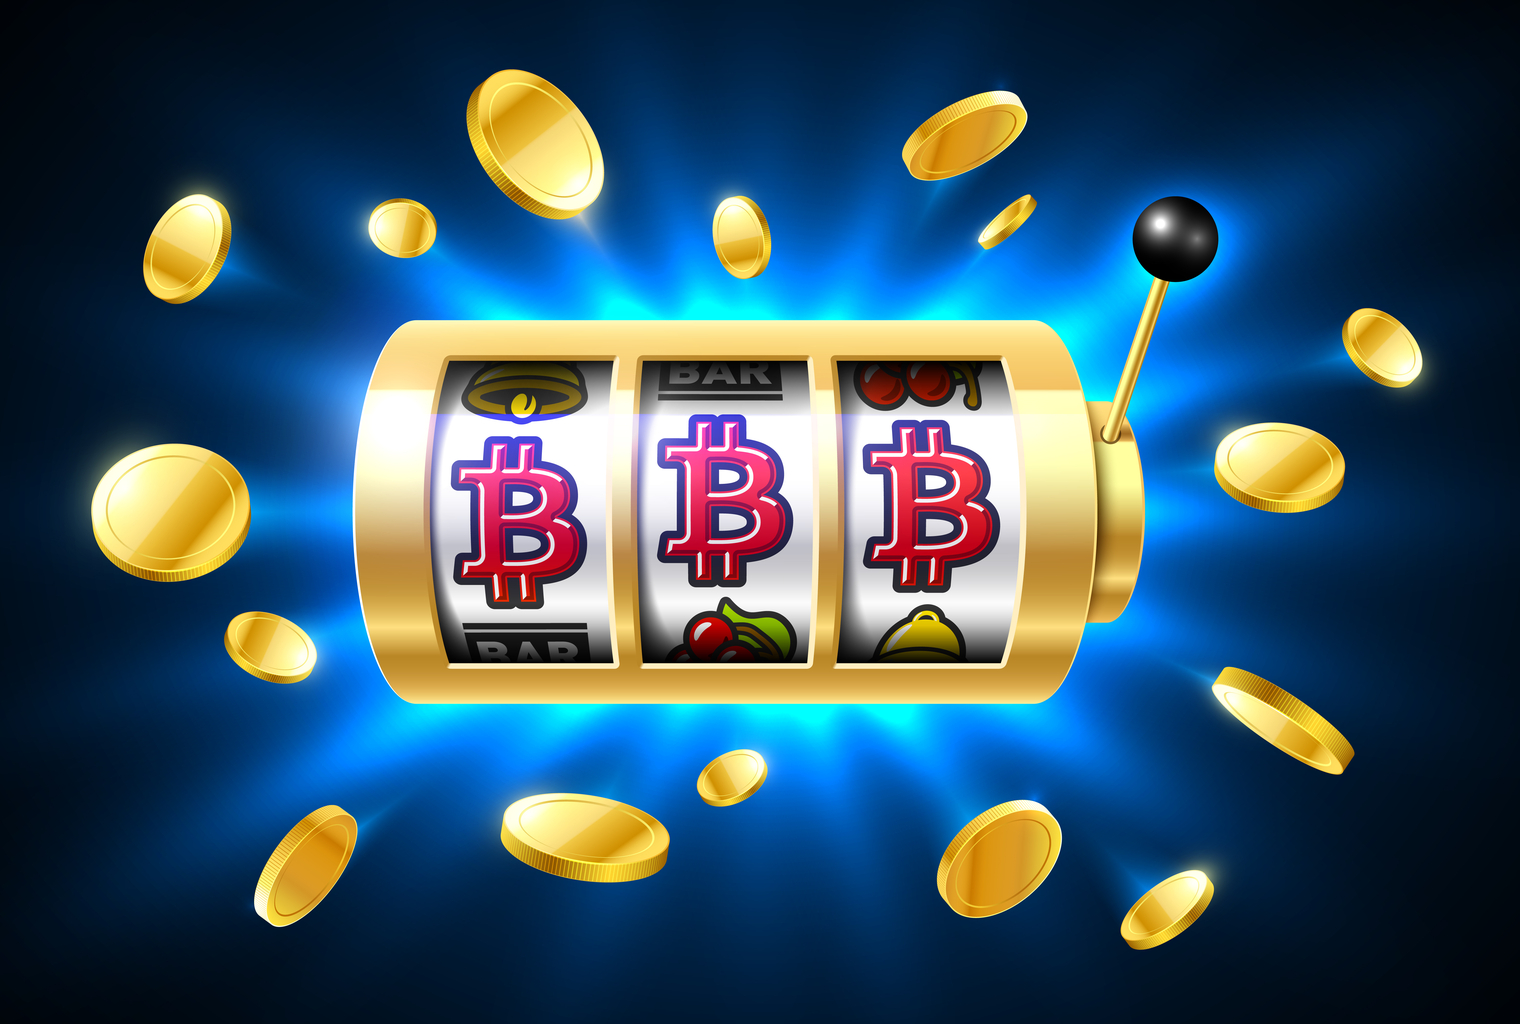 New free online casino slot games